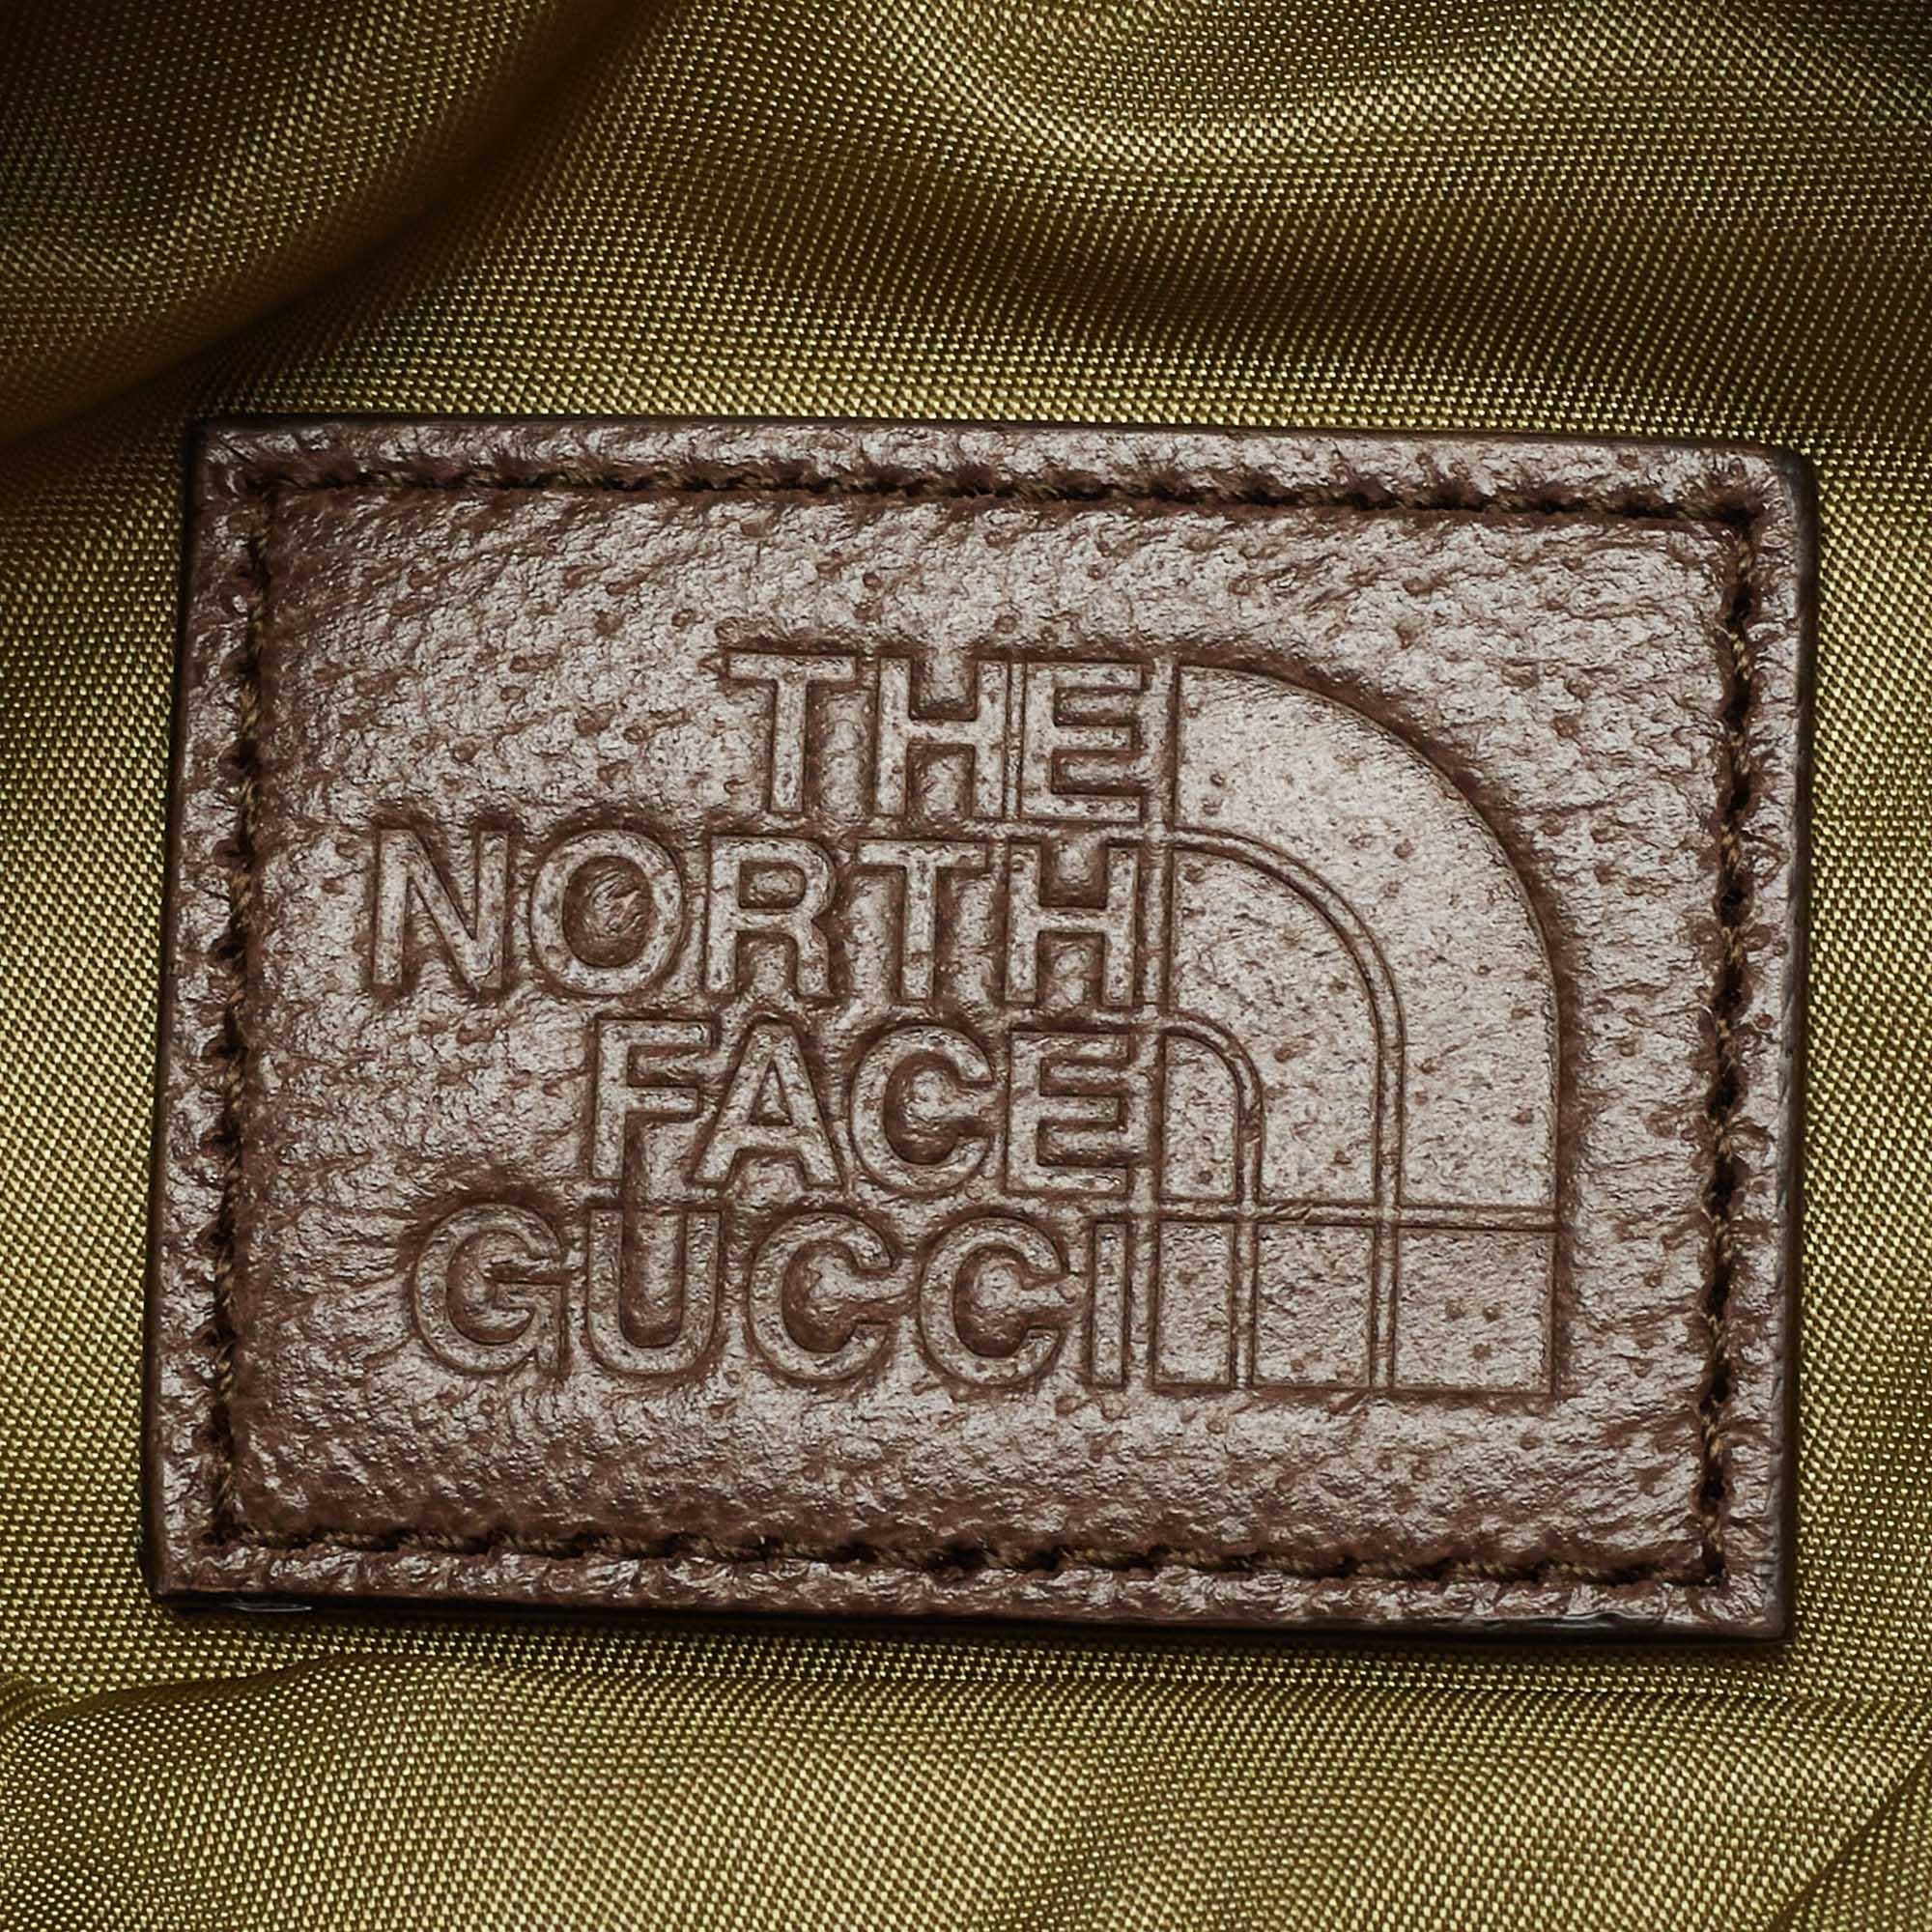 Gucci x The North Face Multicolor Printed Nylon Belt Bag 6